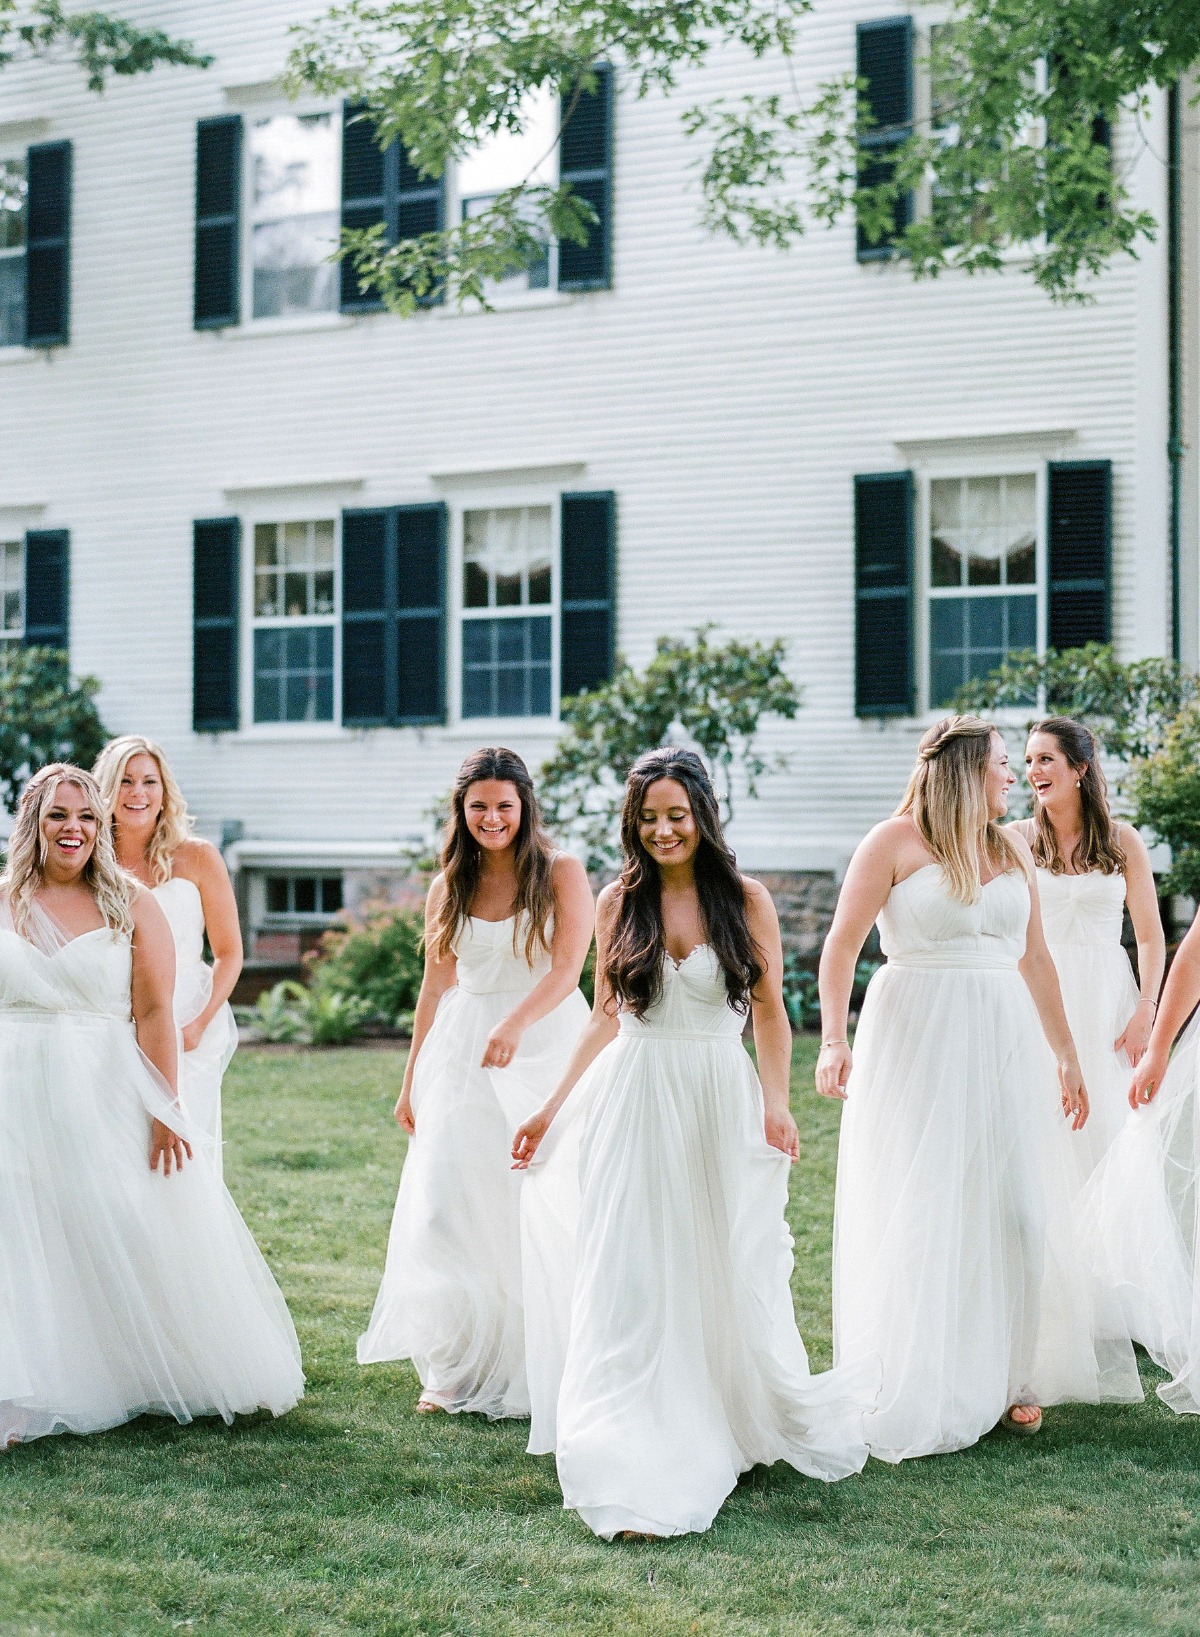 Bridesmaids in white